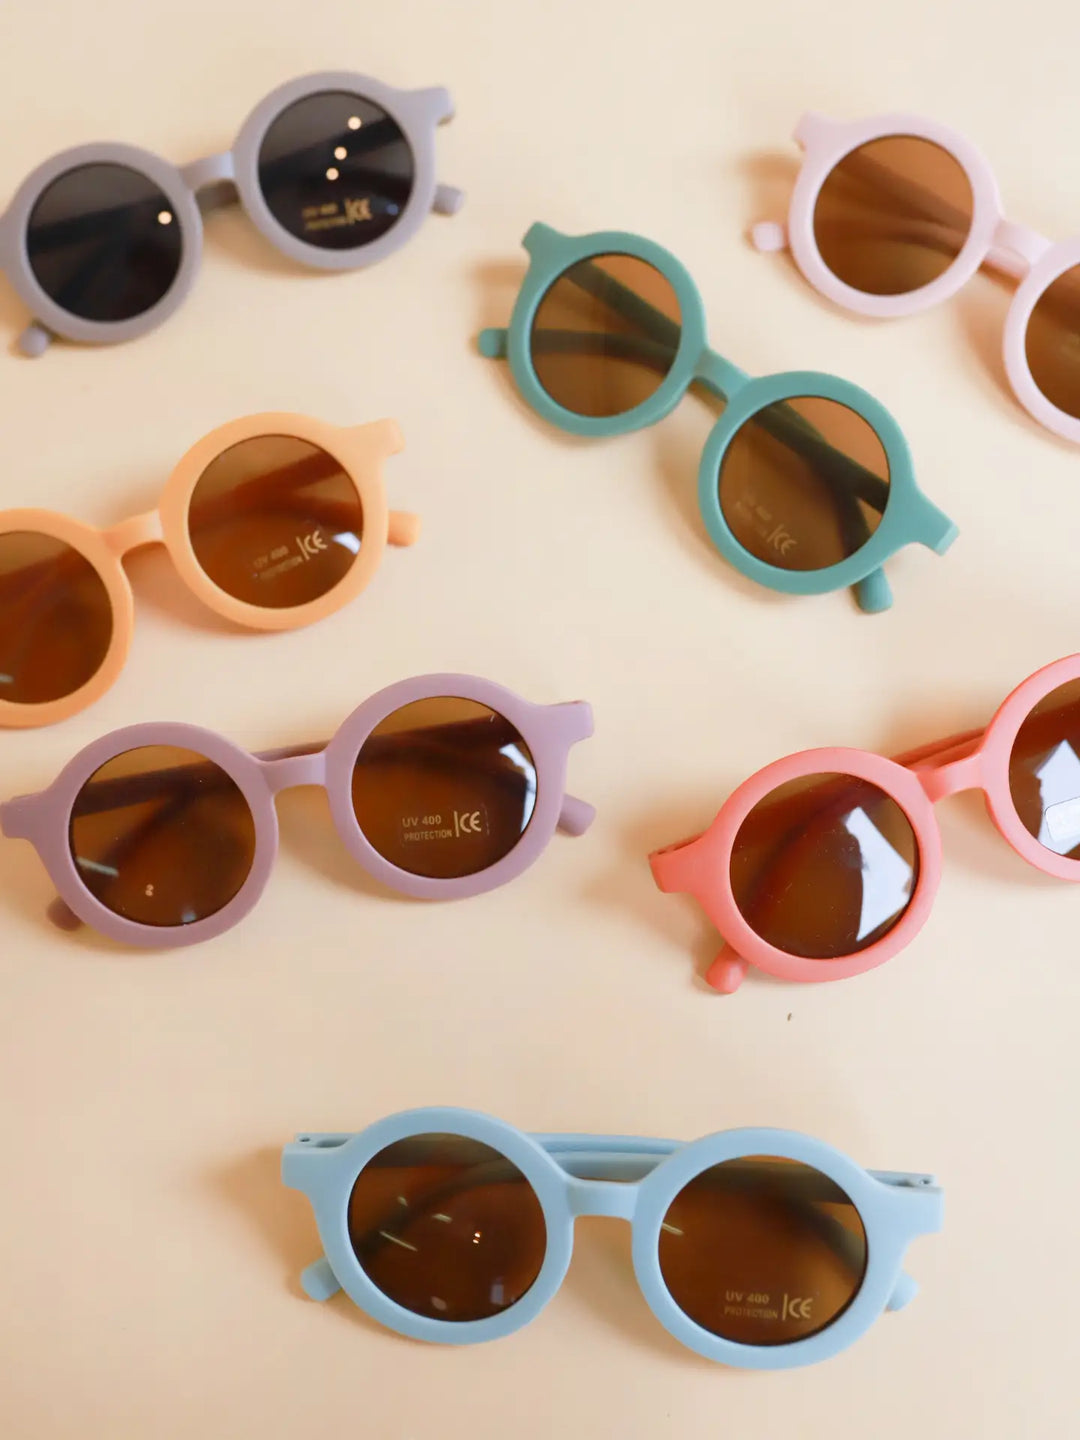 Polished Prints – UV400 Round Toddler Sunglasses